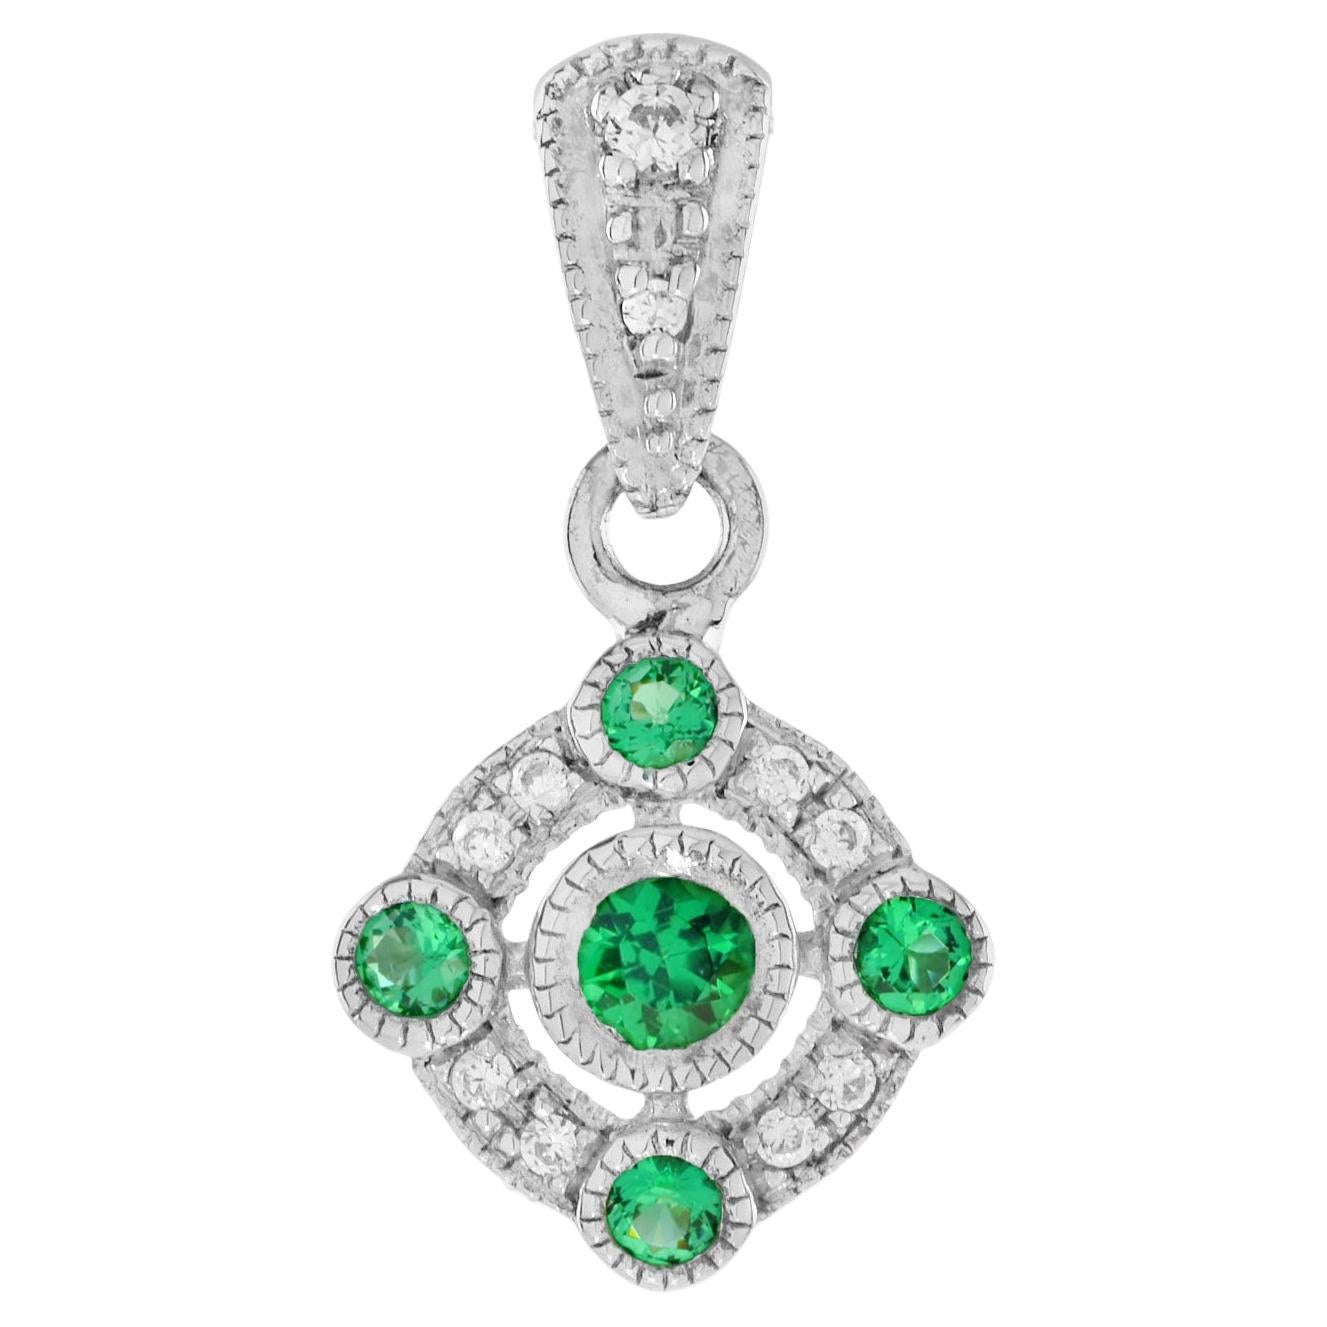 Emerald and Diamond Art Deco Style Pendant in 18K White Gold